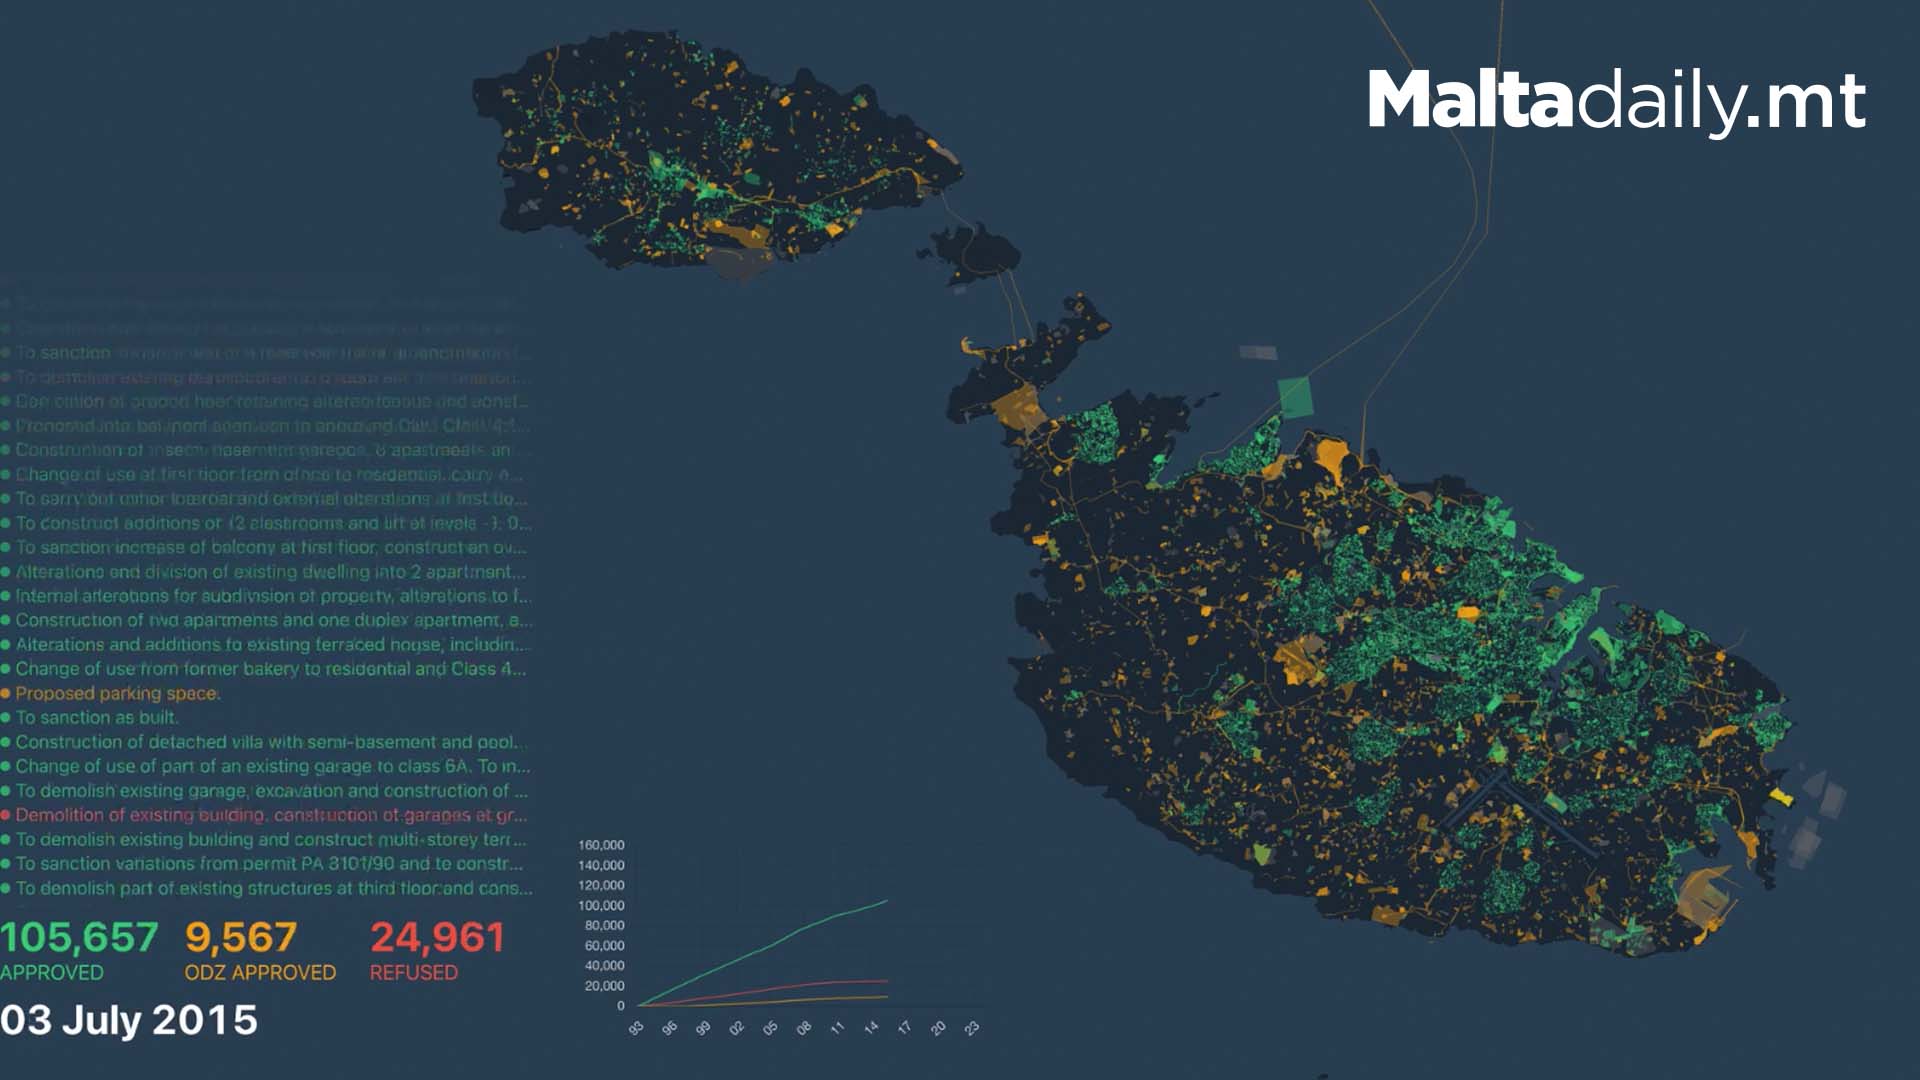 Web Developer Shows 30 Years Of Building Permits In Malta